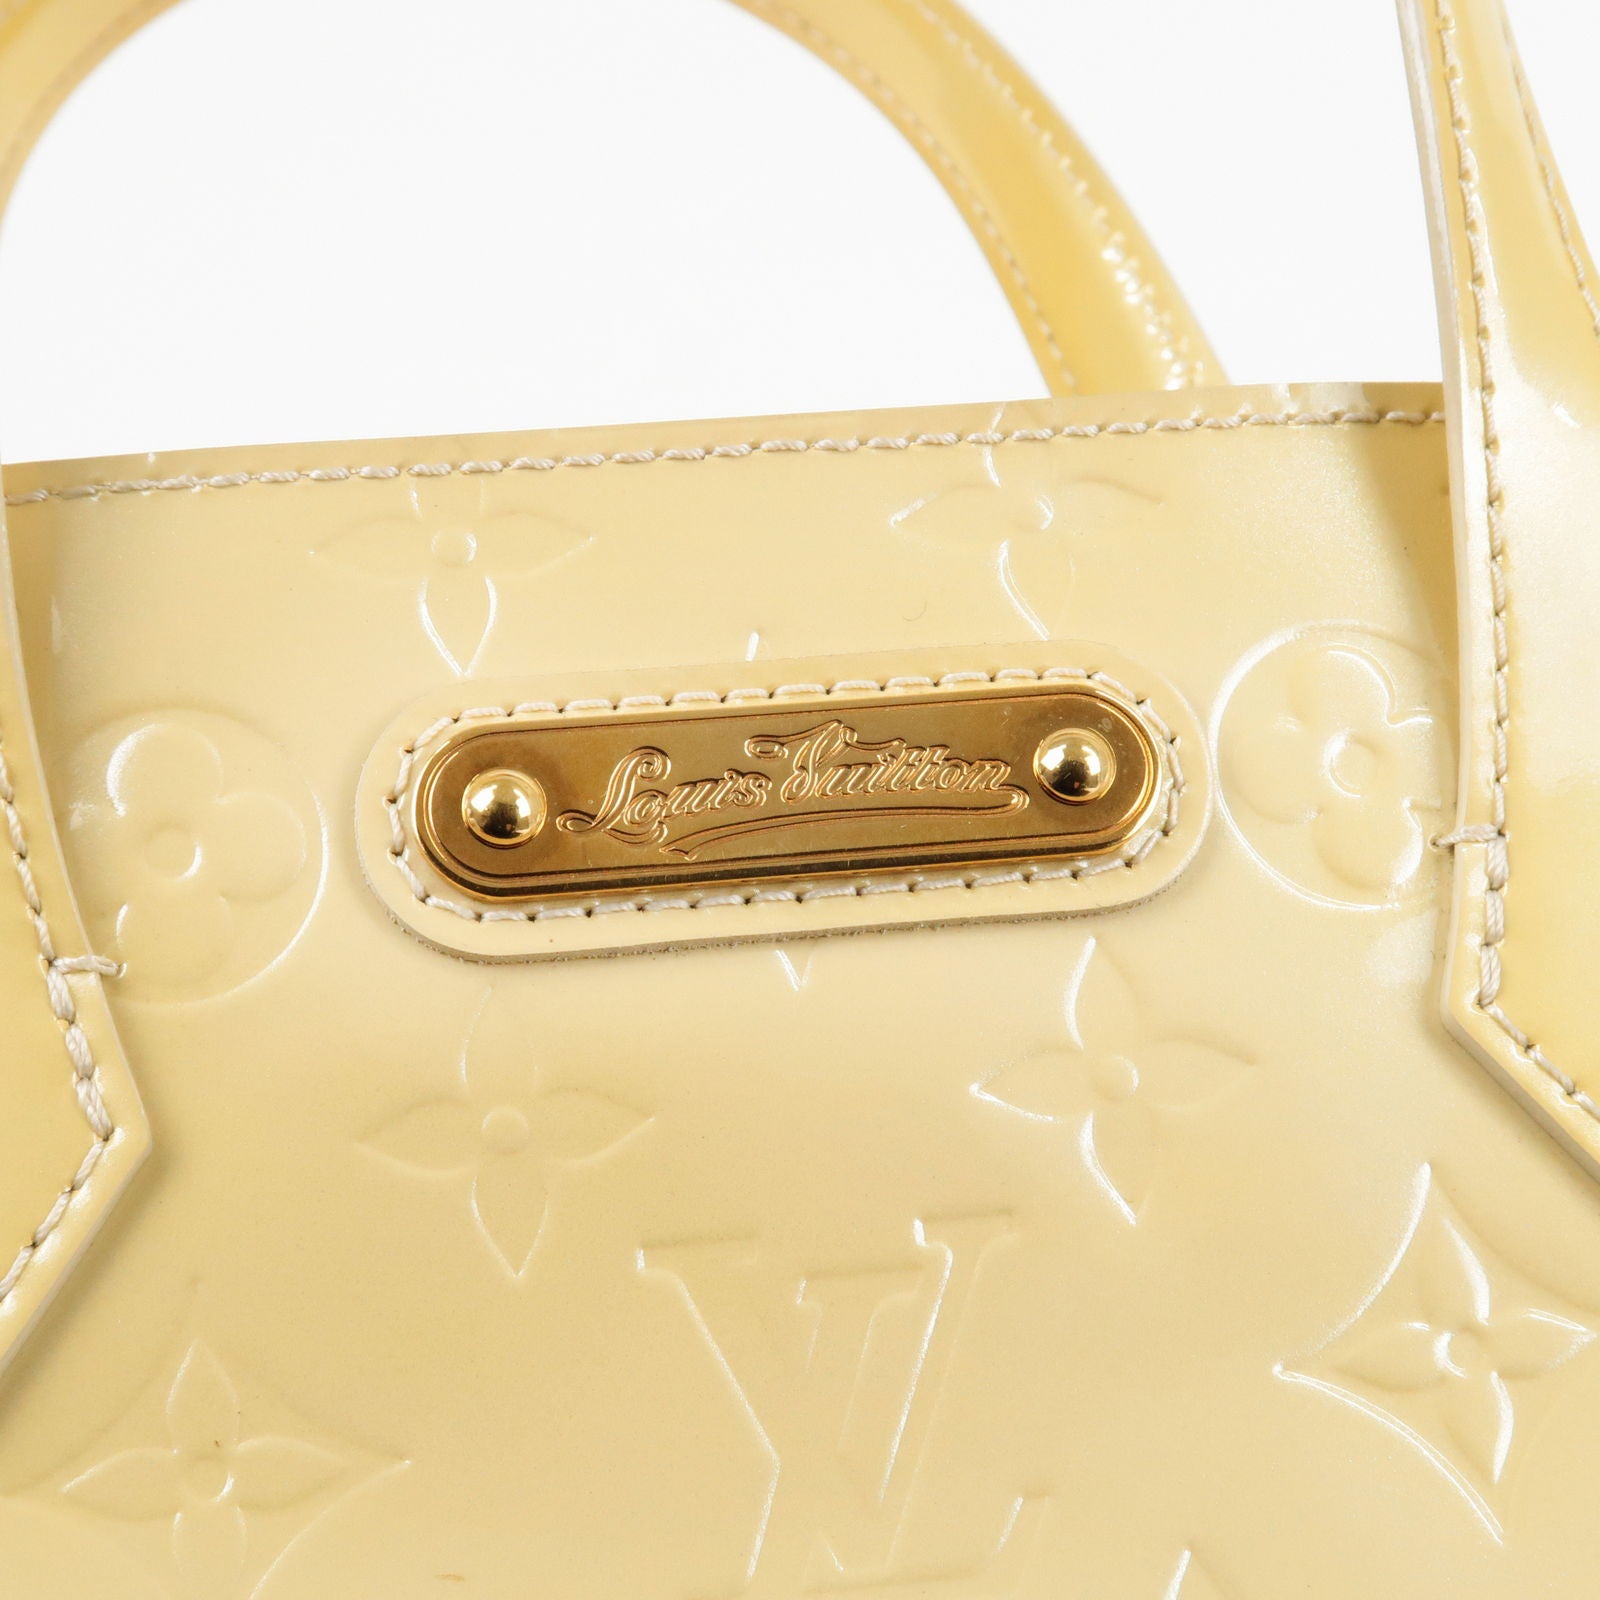 Louis Vuitton Handbag Wilshire Pm Yellow Green Monogram Vernis